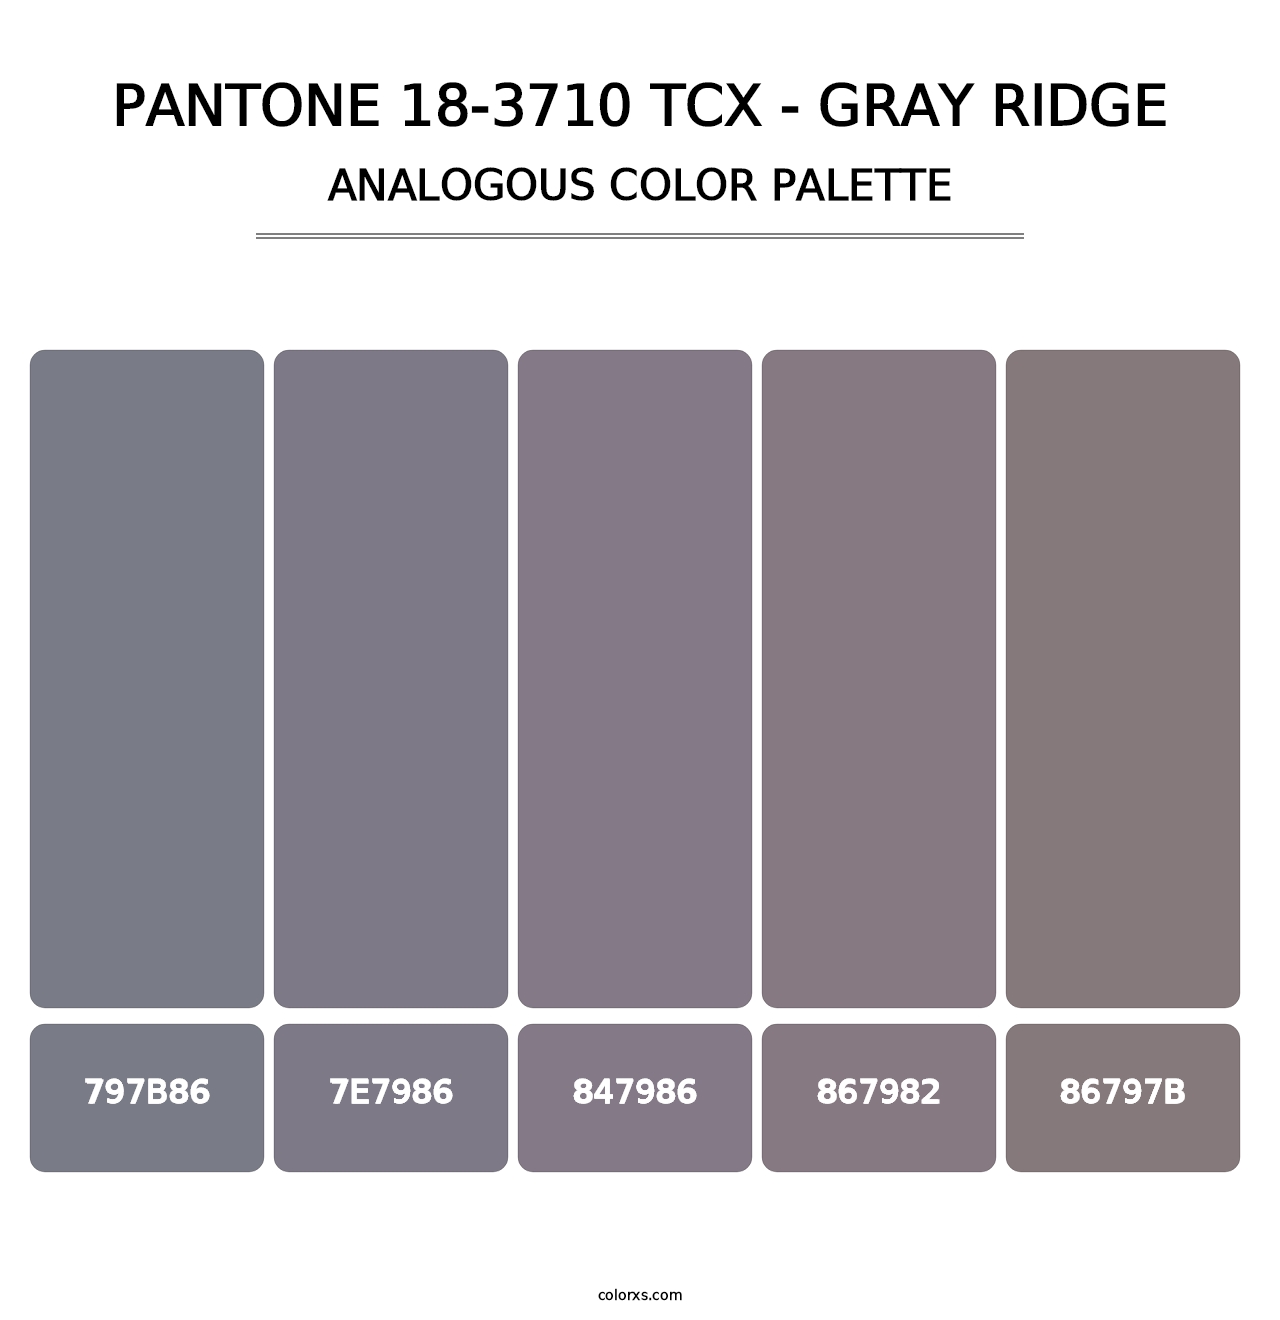 PANTONE 18-3710 TCX - Gray Ridge - Analogous Color Palette